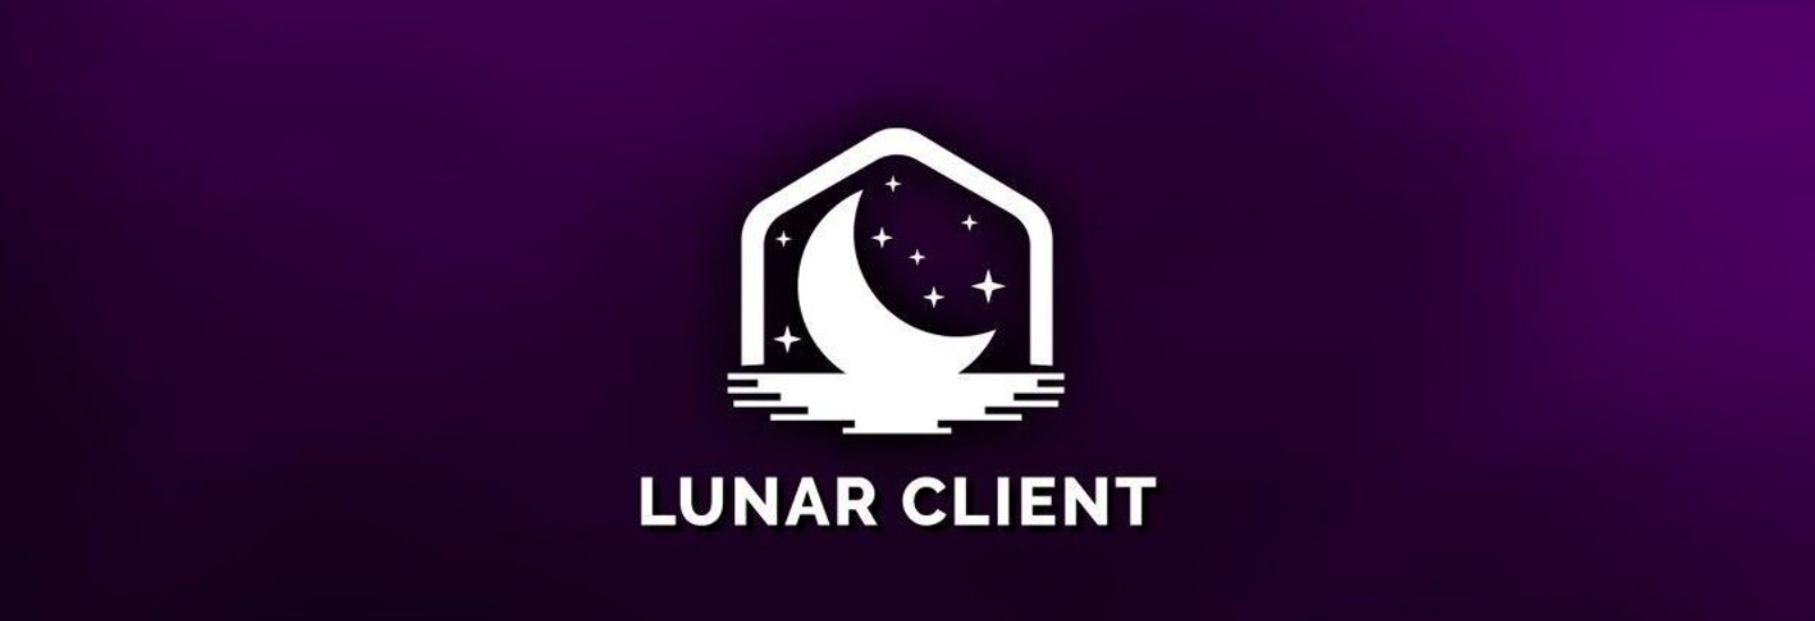 Lunar download. Лунар клиент. Лунар значок. Иконка Лунар клиента. Картинки Lunar client.